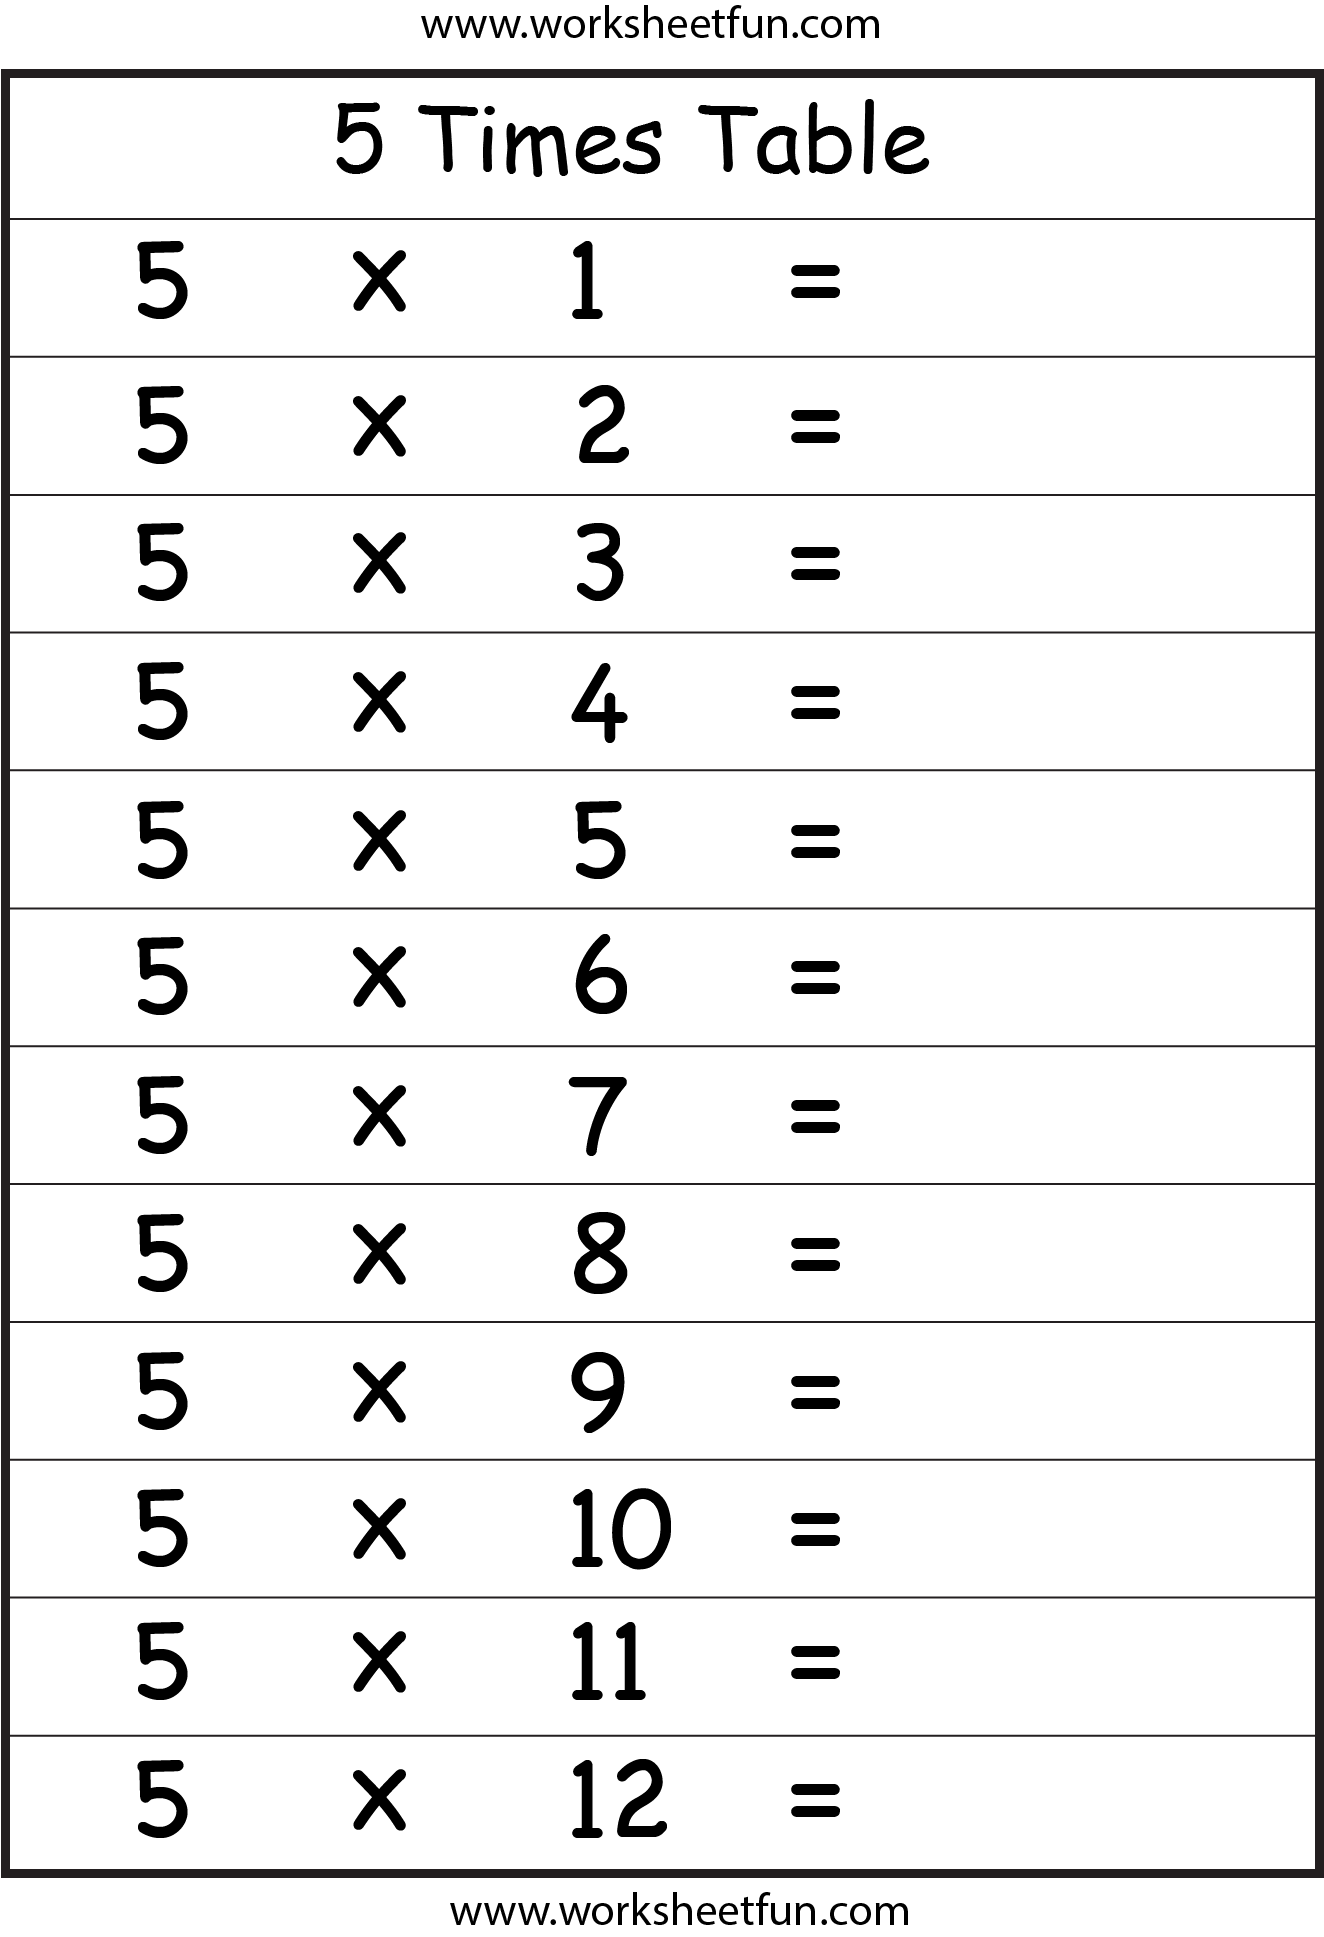 multiplication-times-tables-worksheets-2-3-4-5-6-7-8-9-10-11